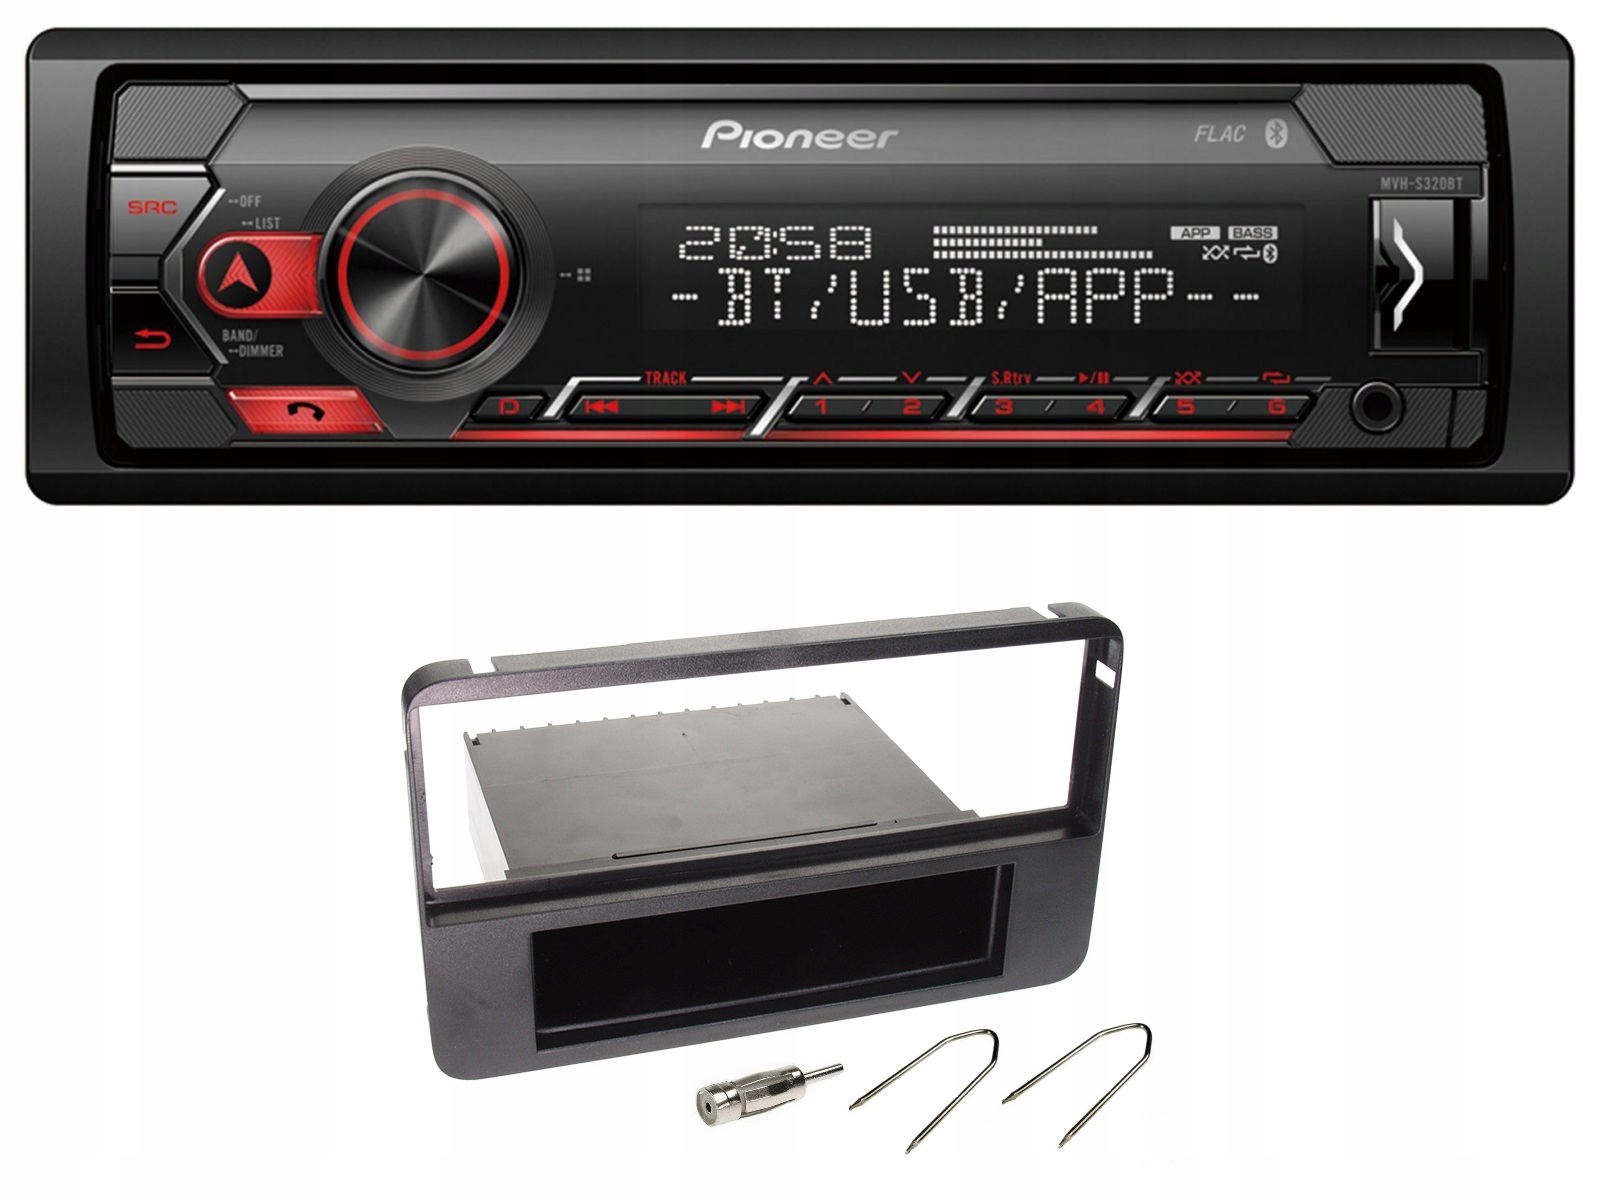 PIONEER MVH-S320BT RADIO 1DIN USB AUX ALFA 159